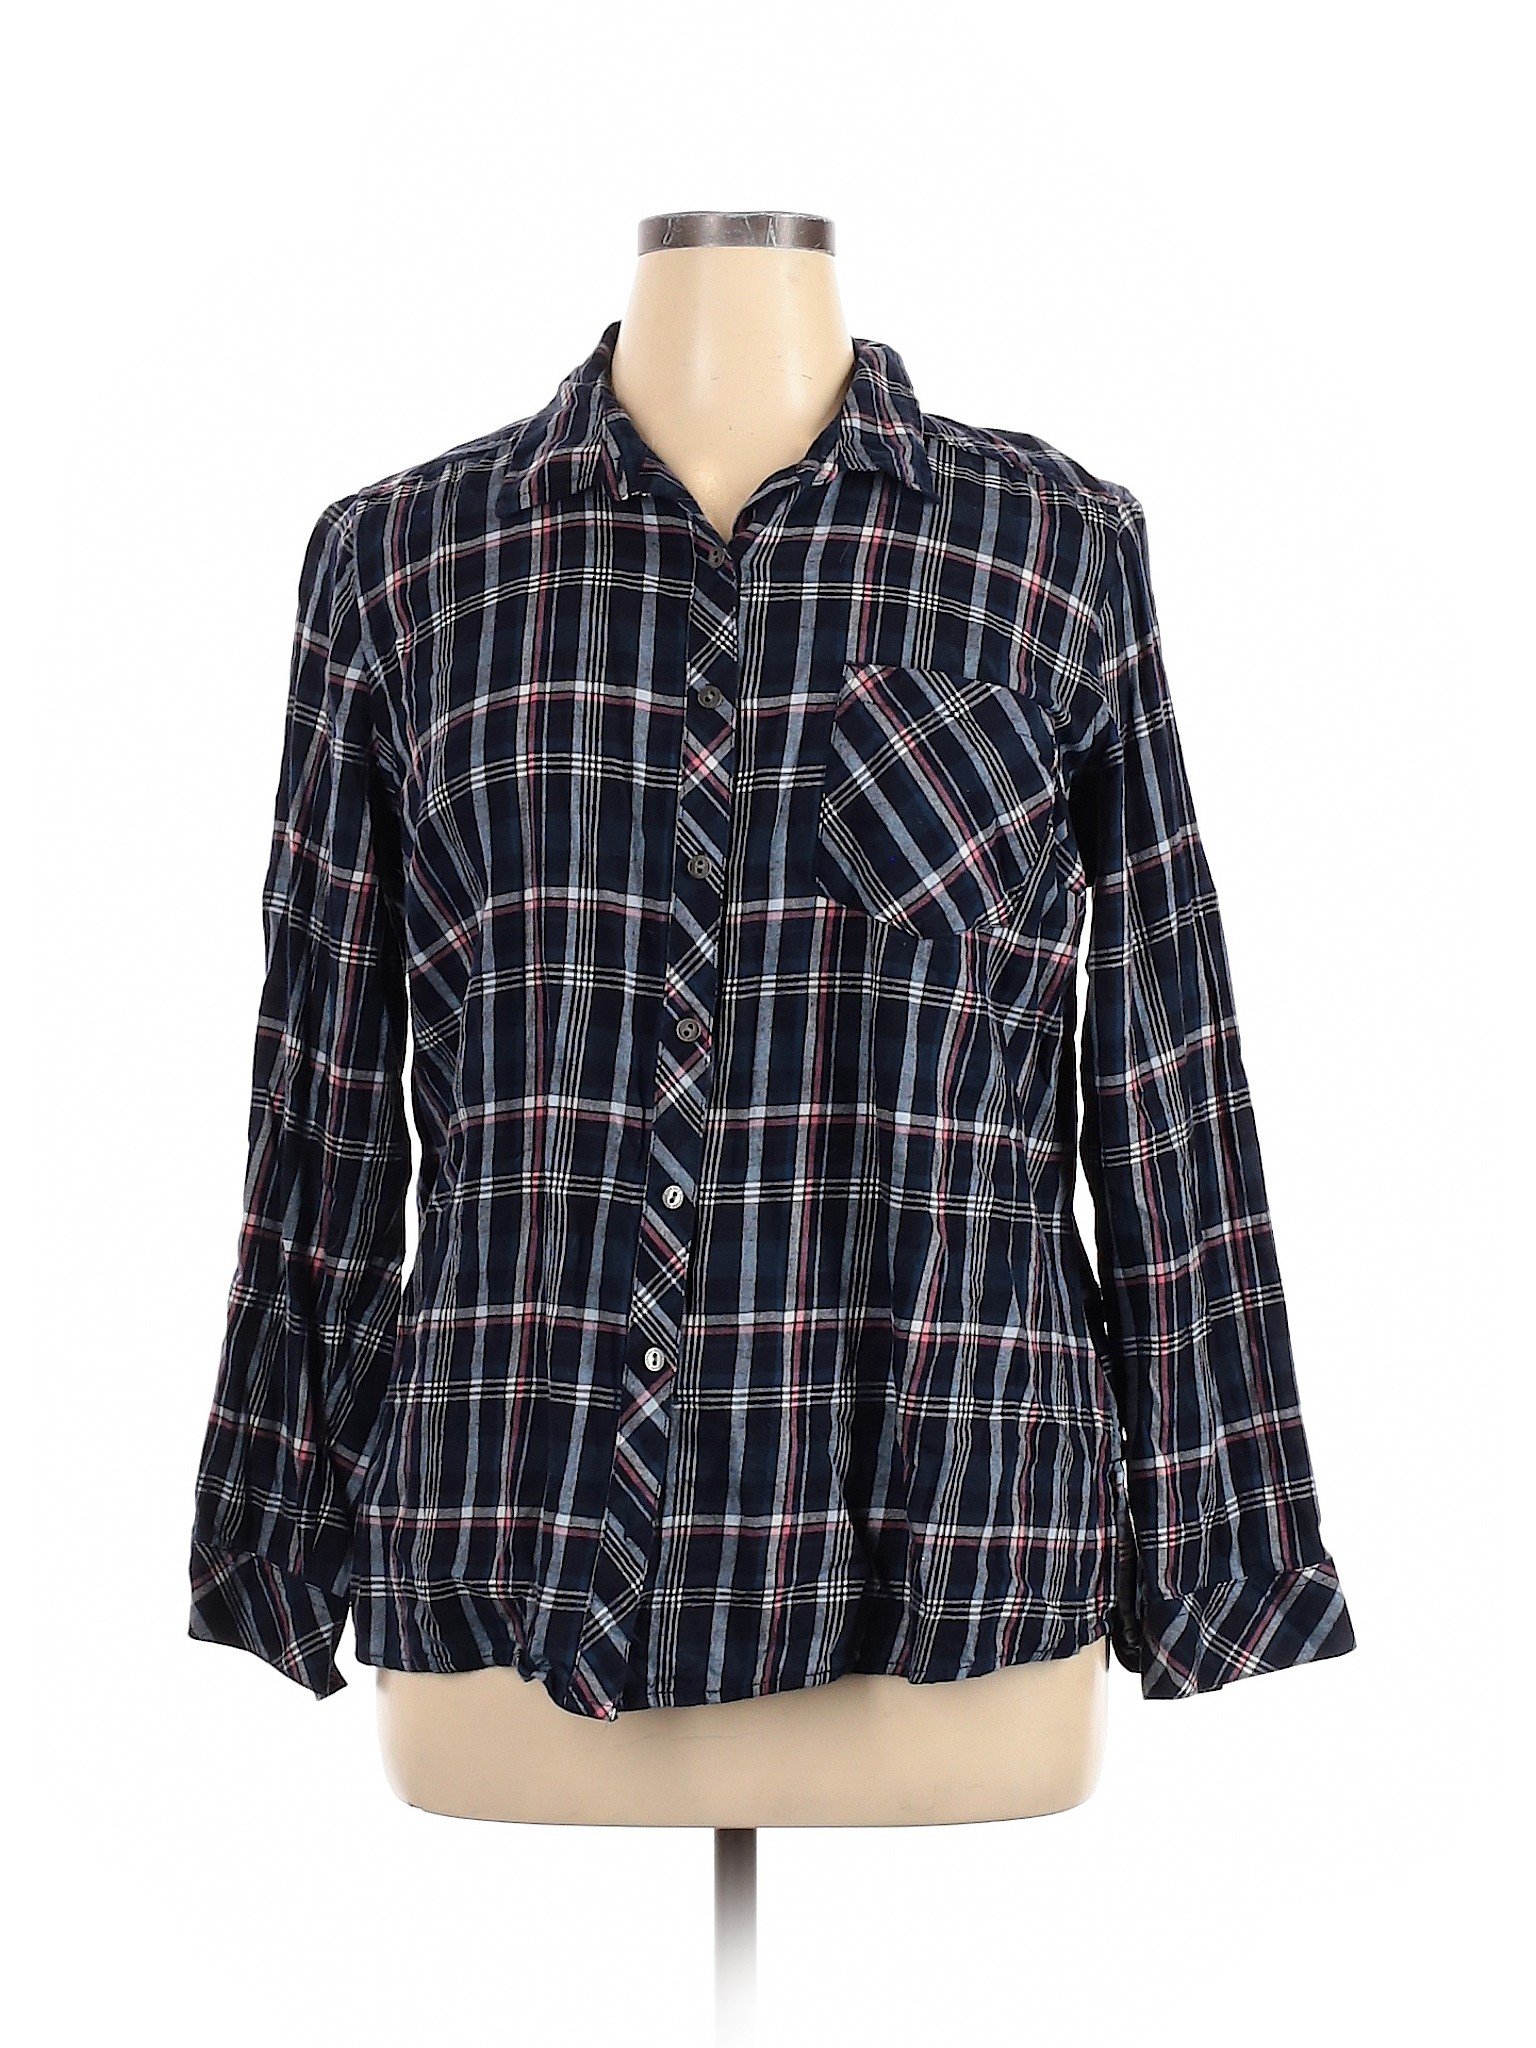 SONOMA life + style Women Blue Long Sleeve Button-Down Shirt XL | eBay